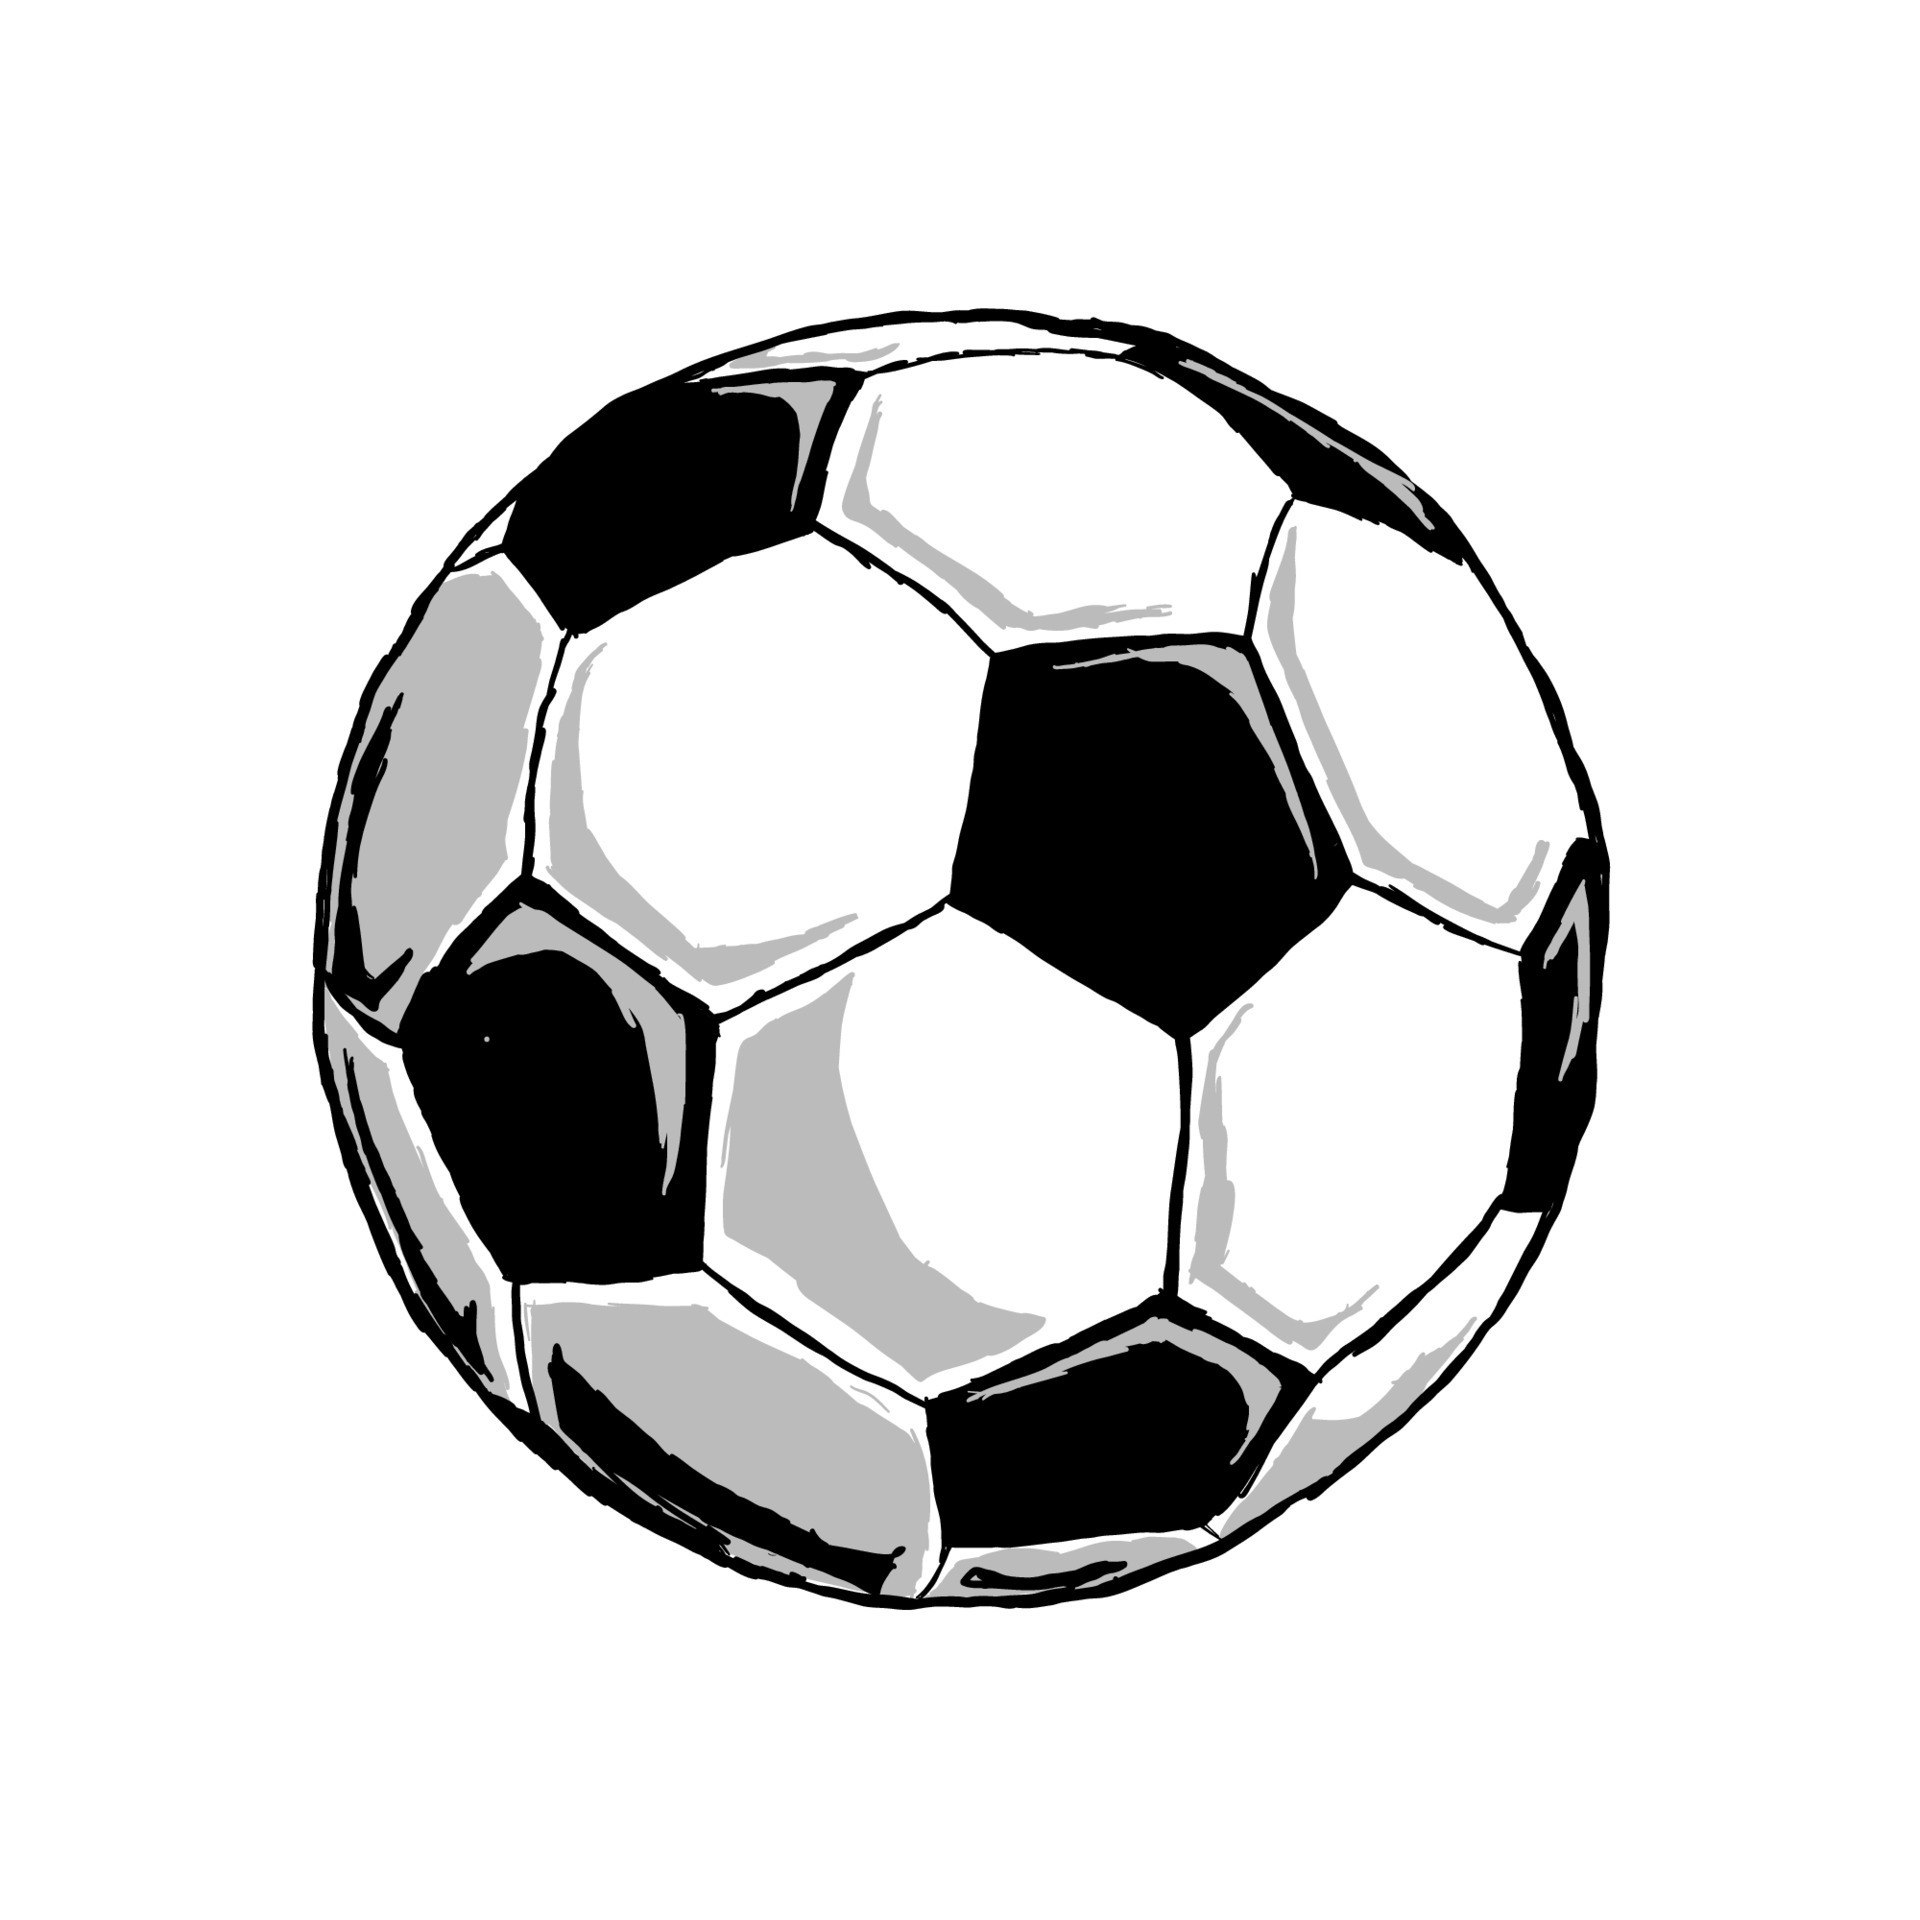 Soccer Ball Sketch Illustration 13897424  Megapixl